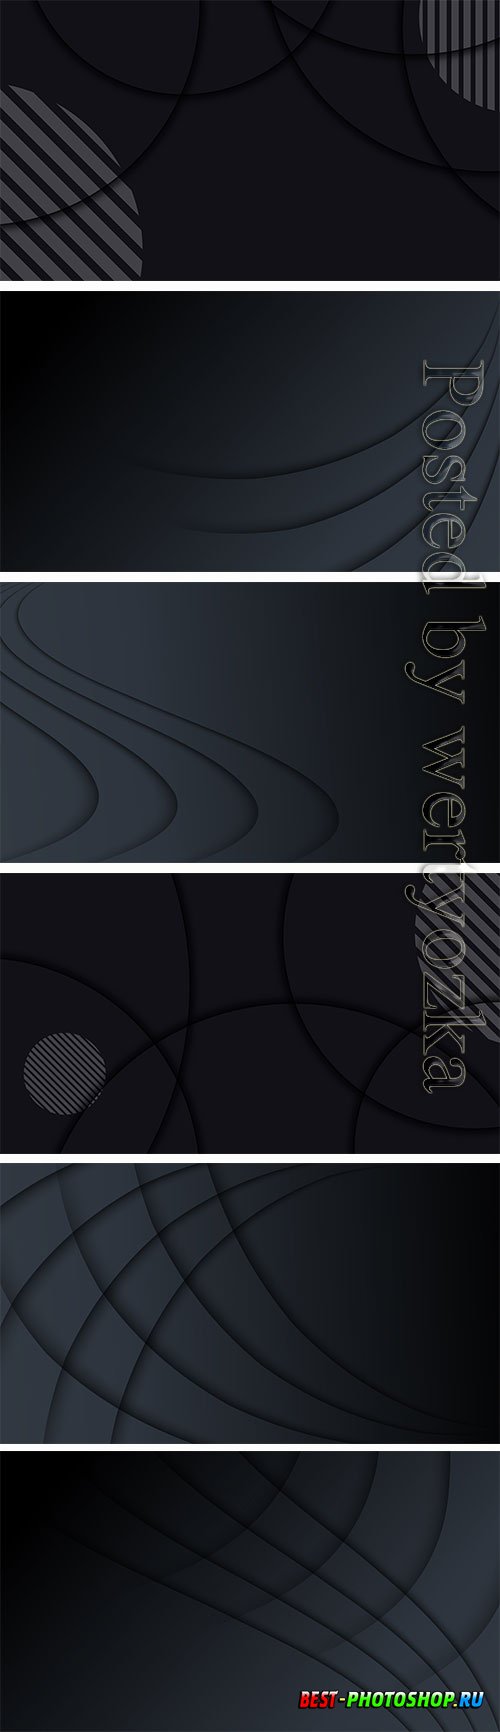 Modern abstract black vector background for presentatio